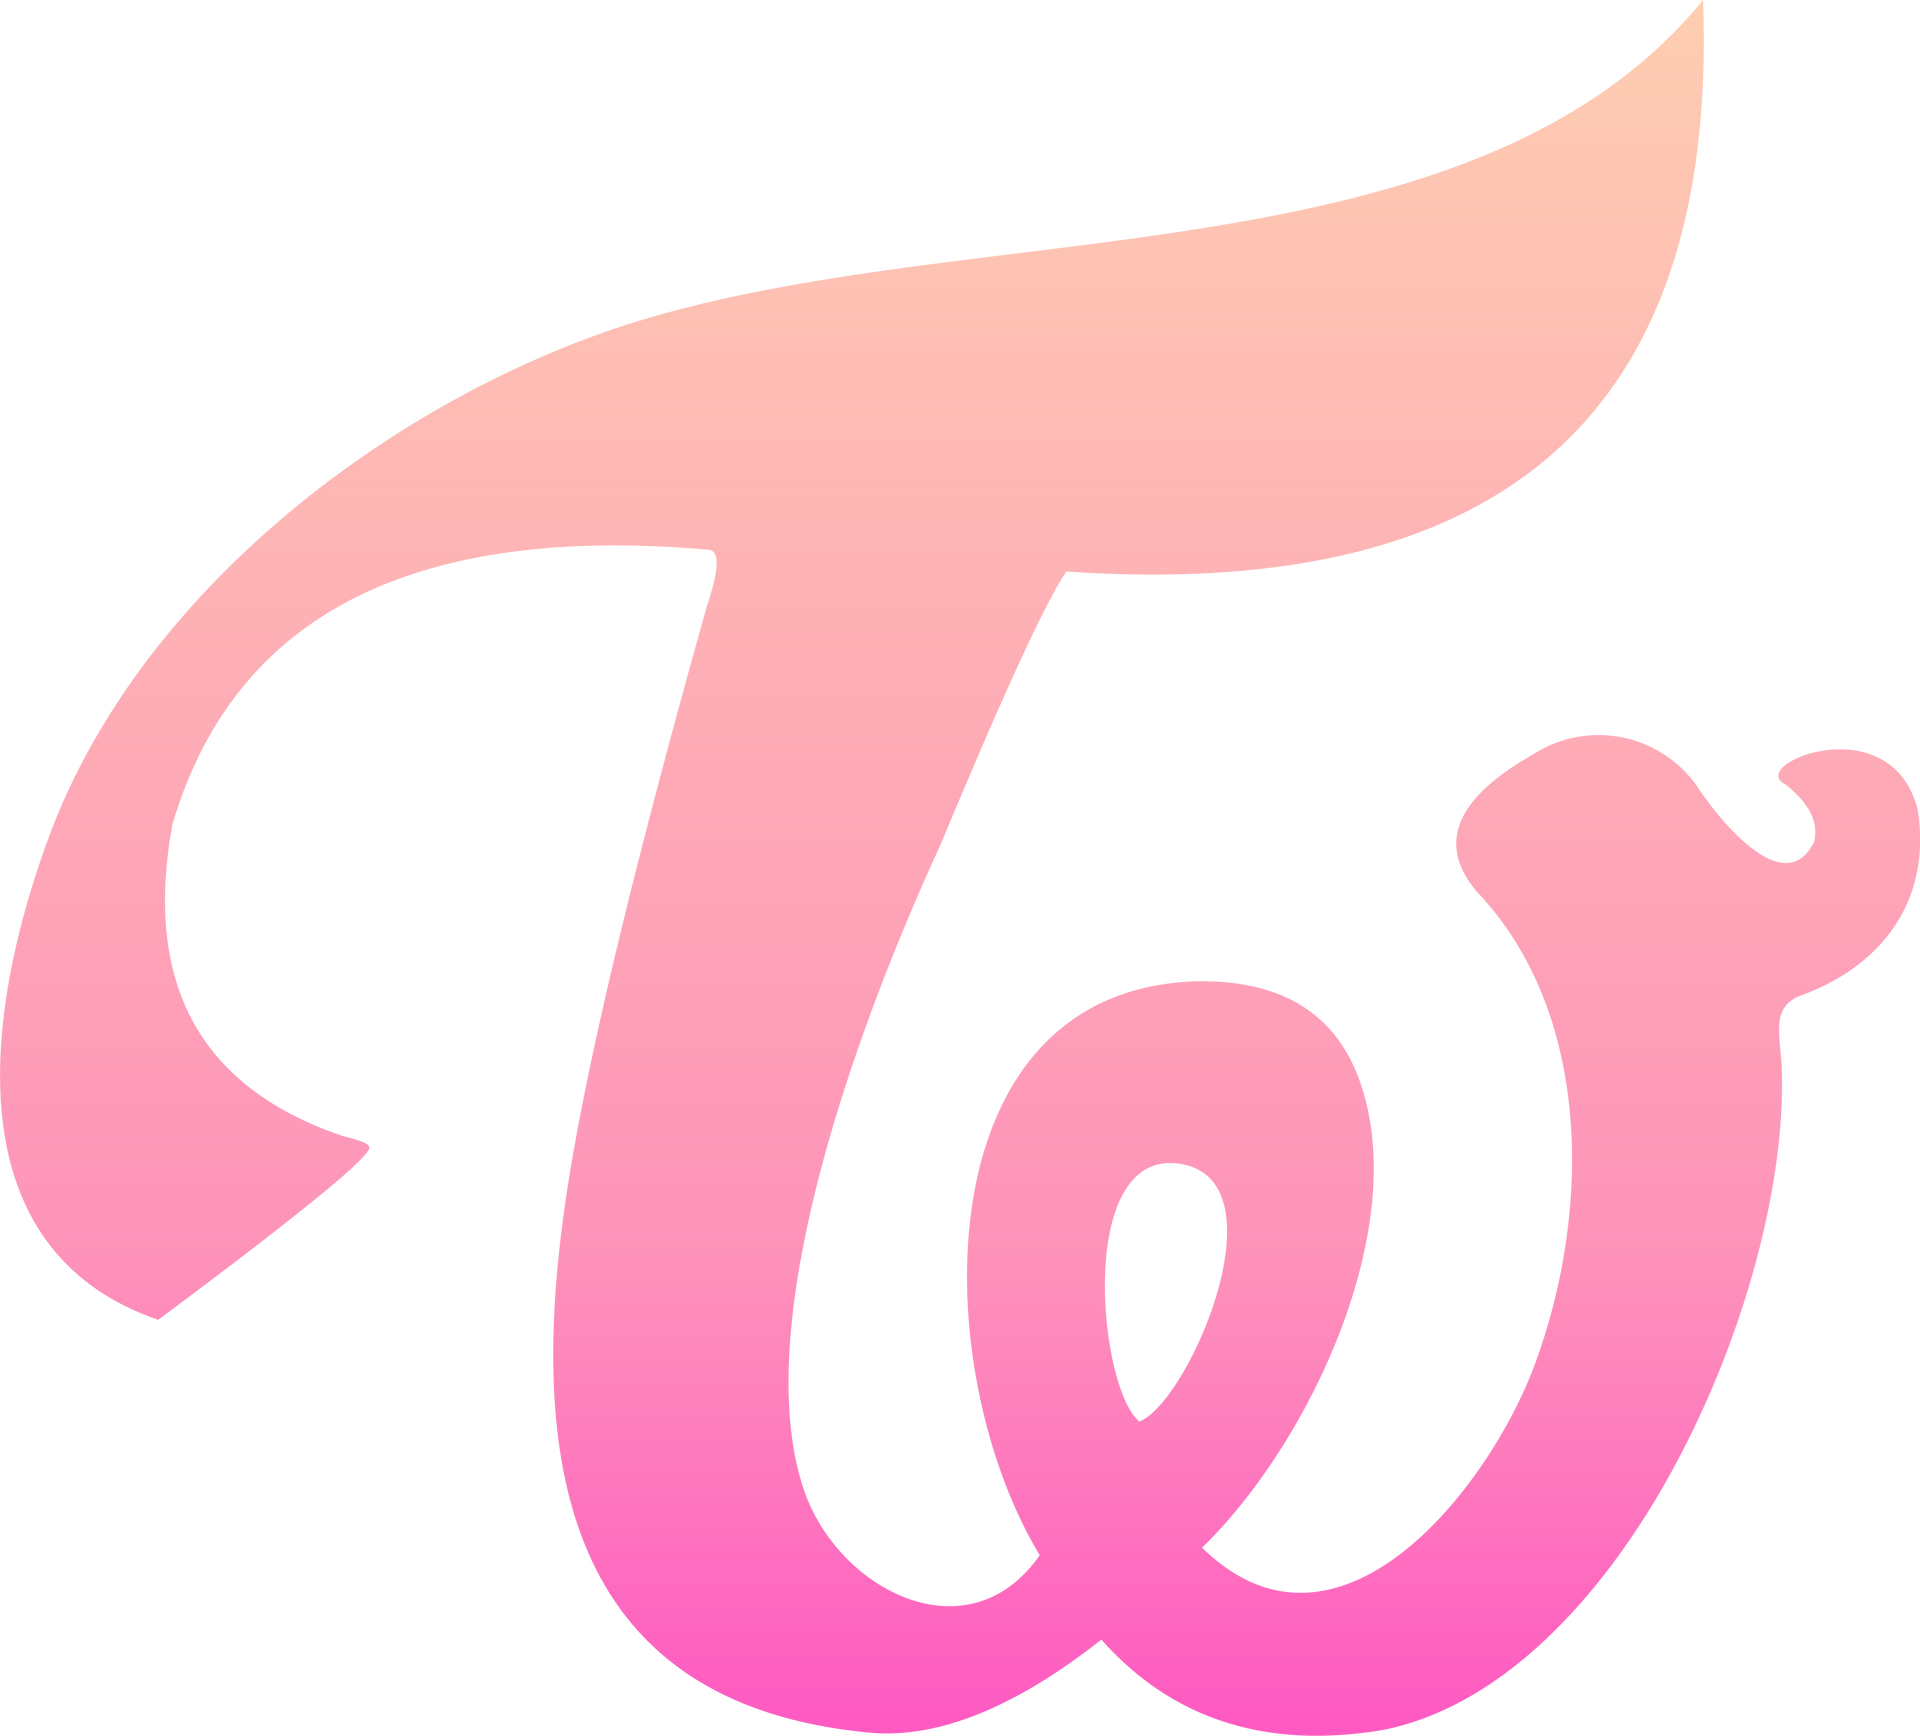 Twice Logo By Mimilevi On Deviantart